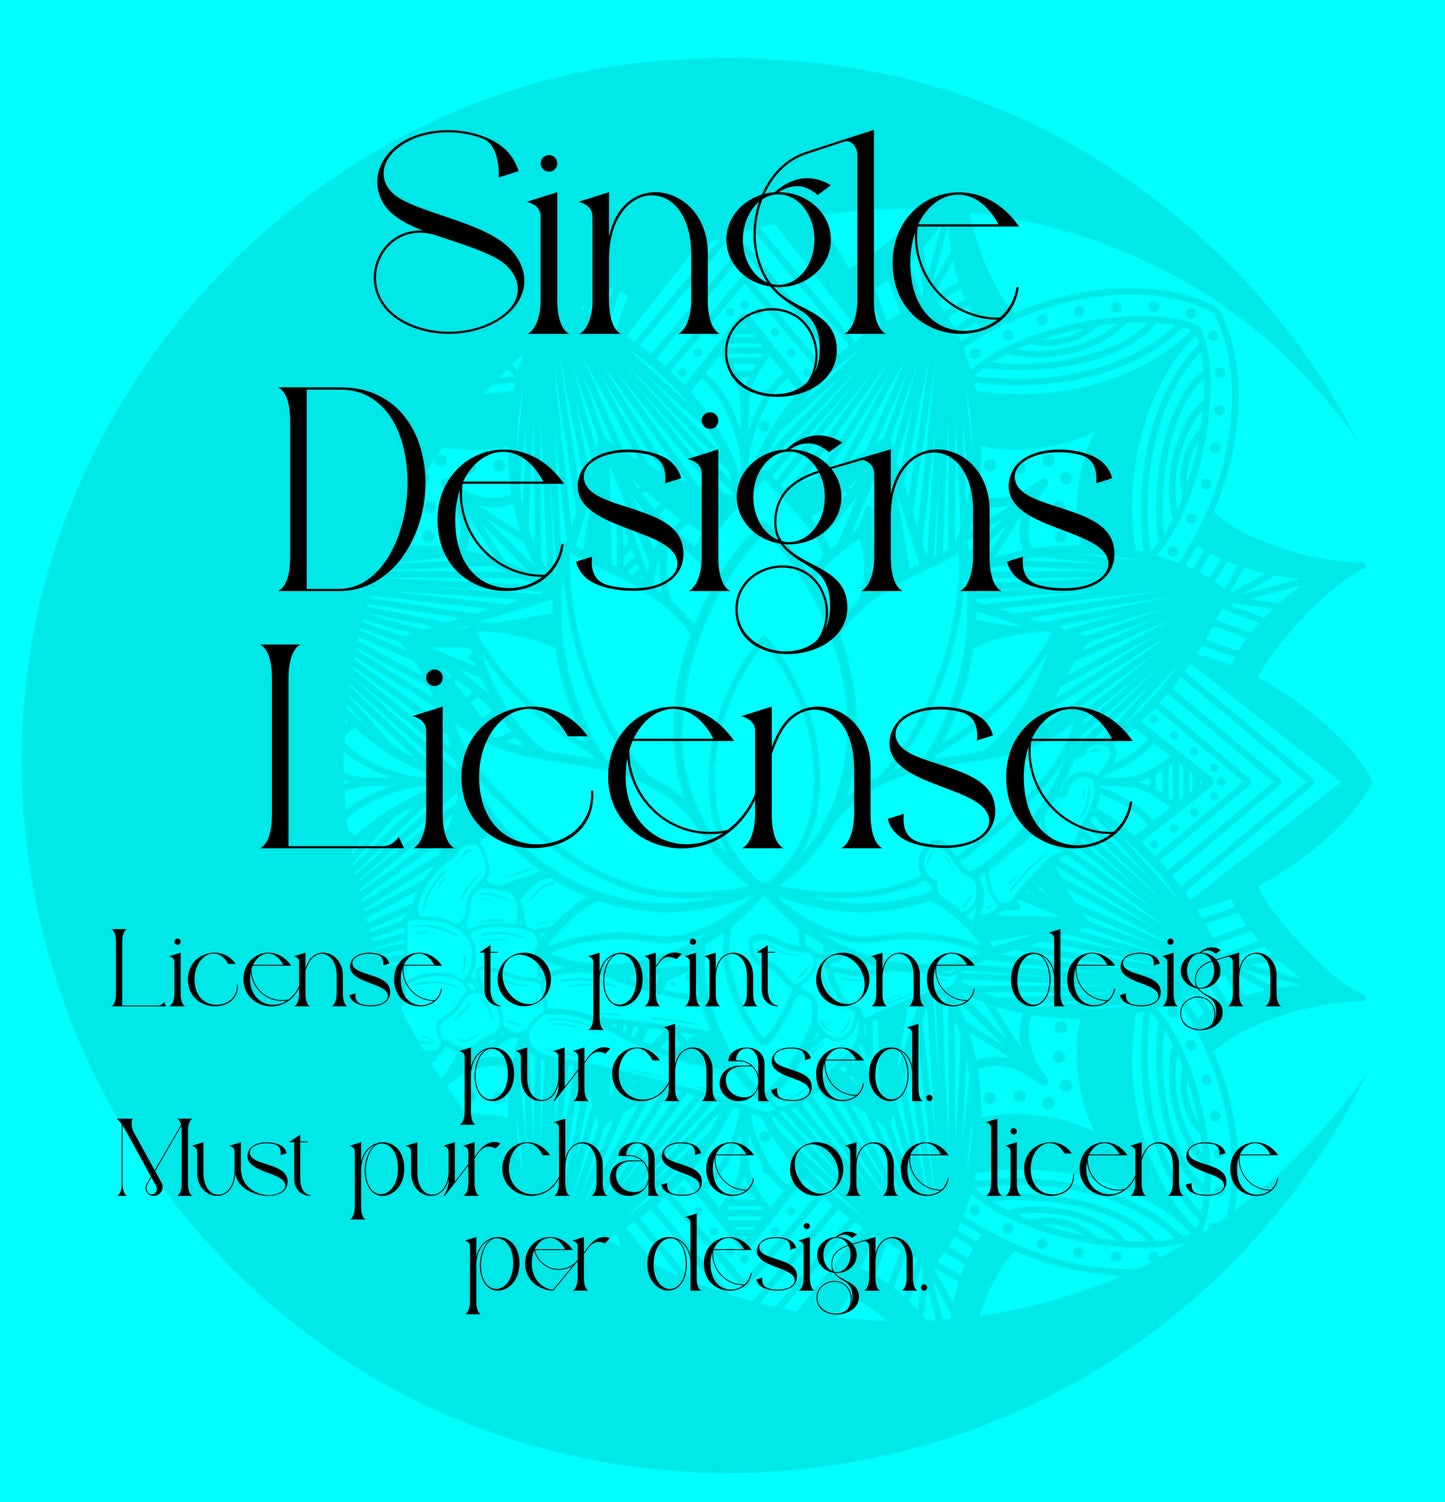 Single Design Commercial License